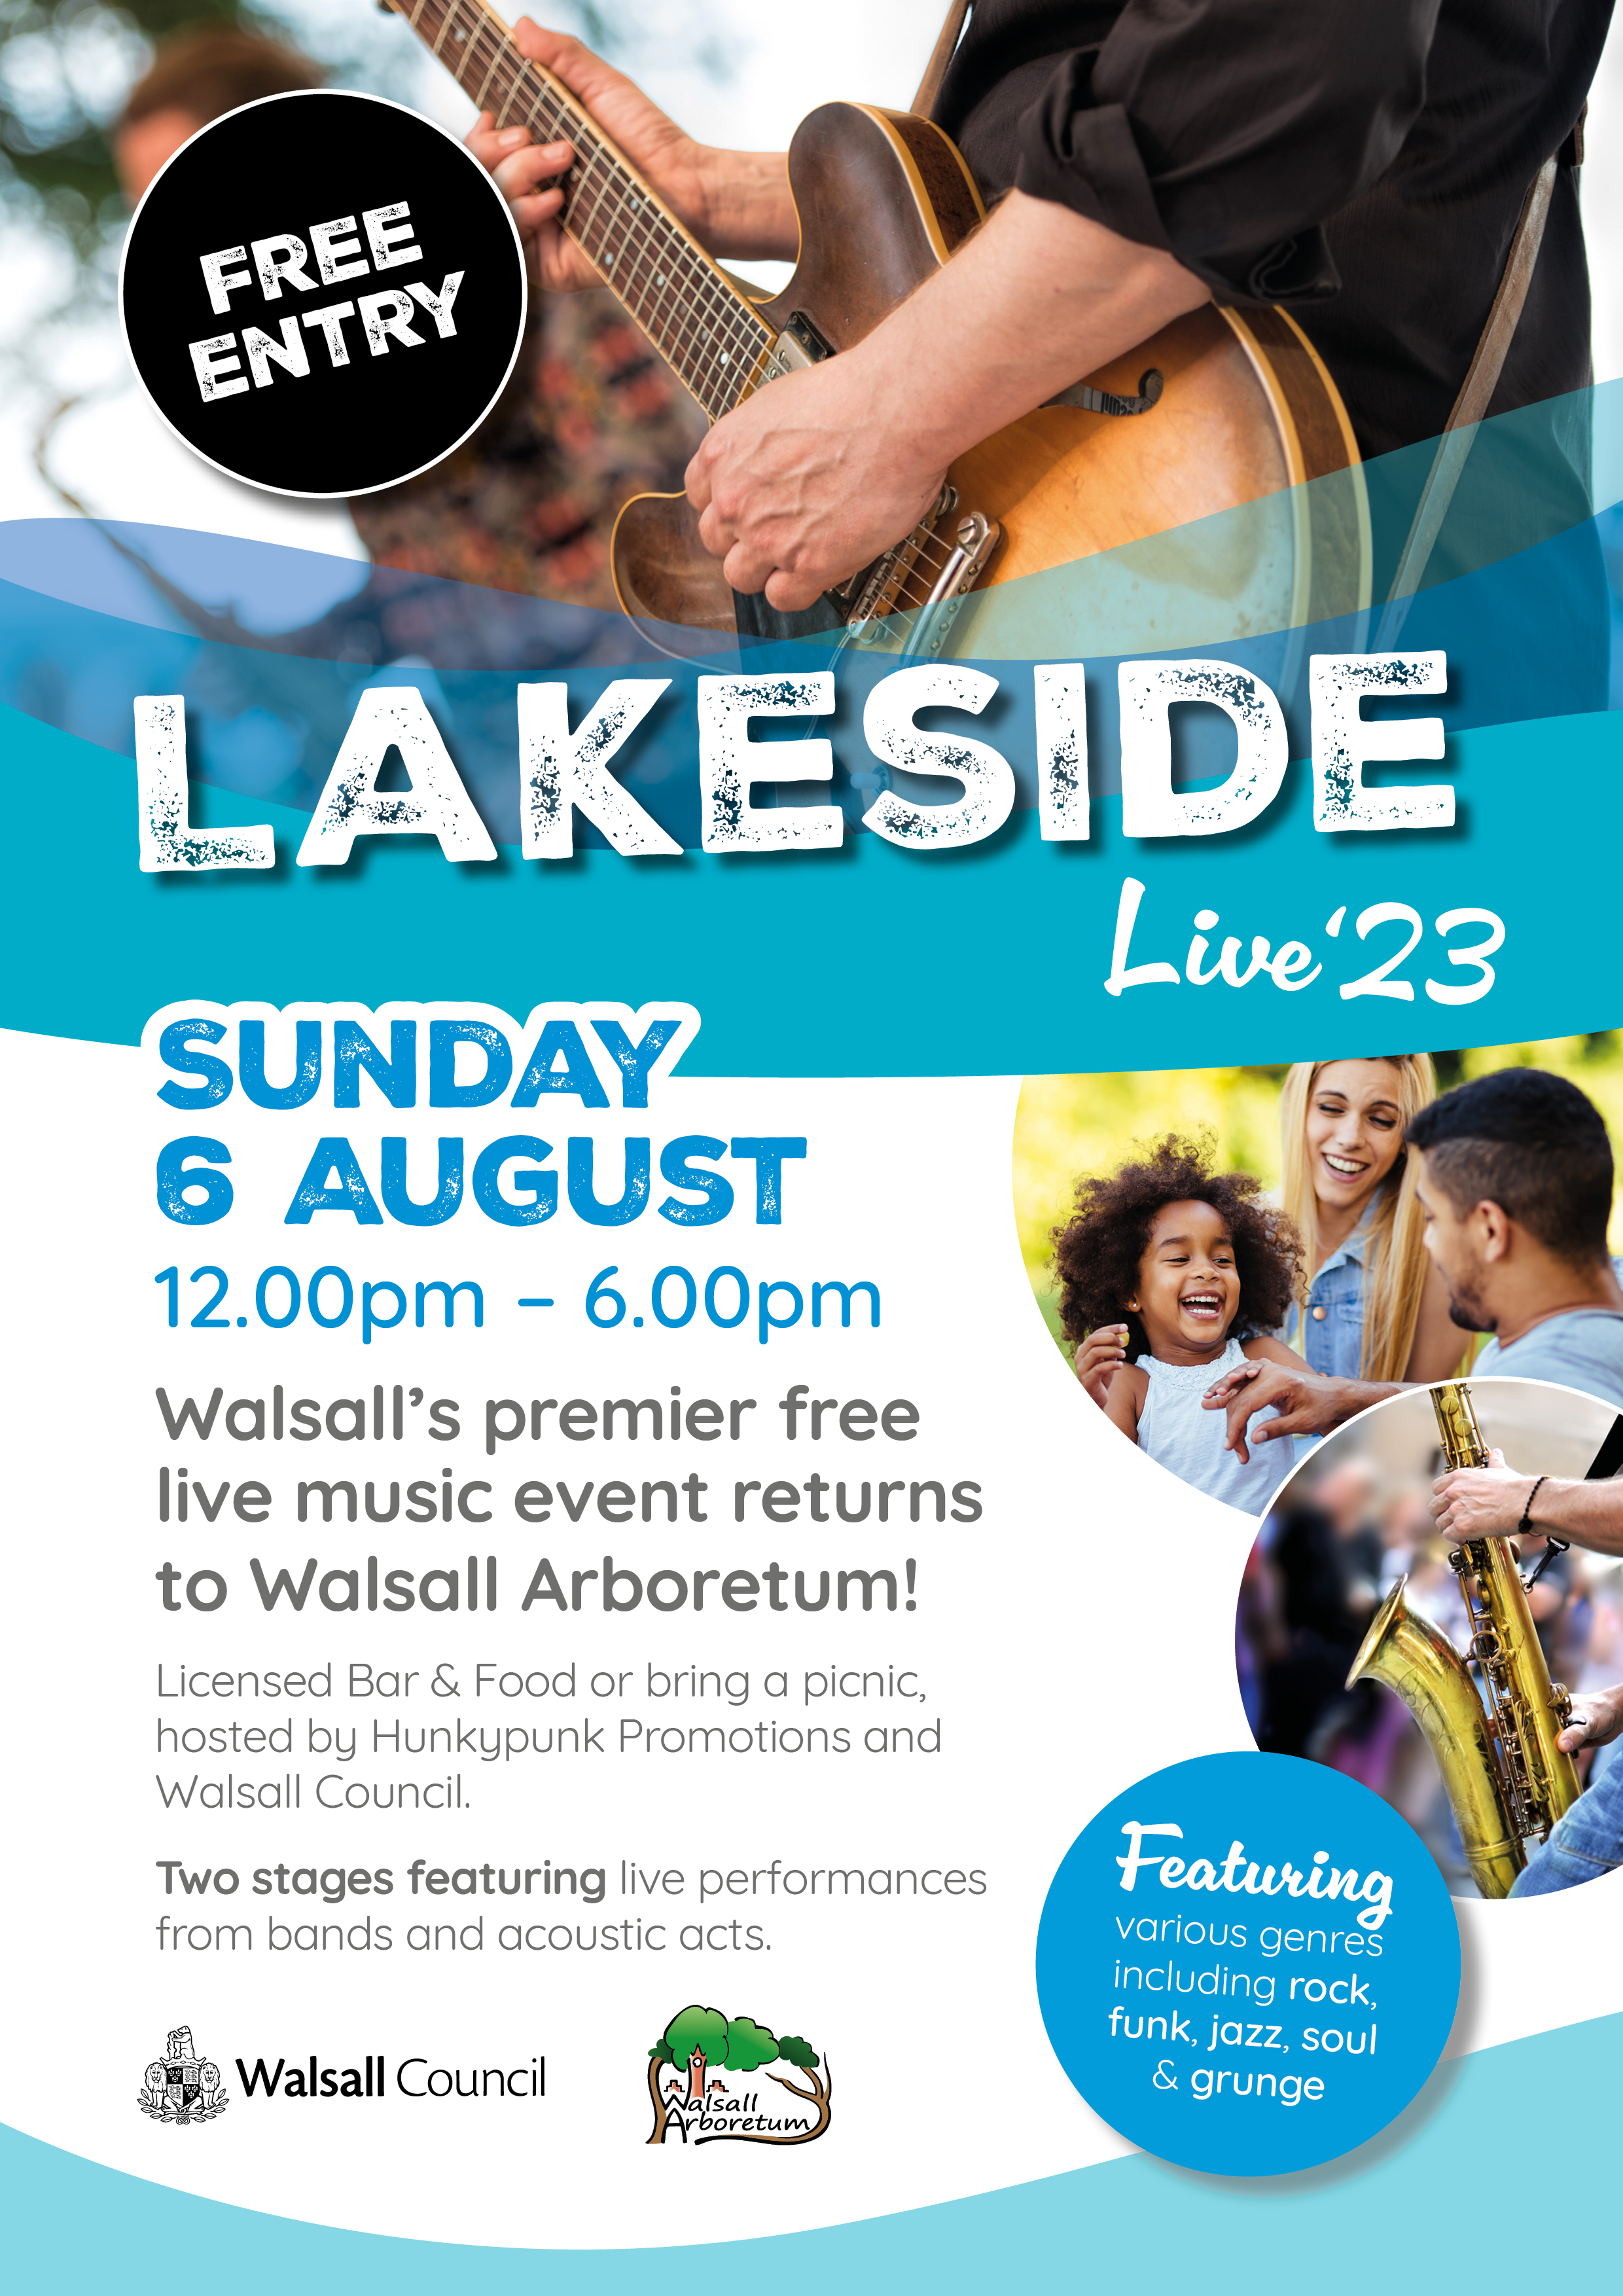 Walsall Arboretum's music concert